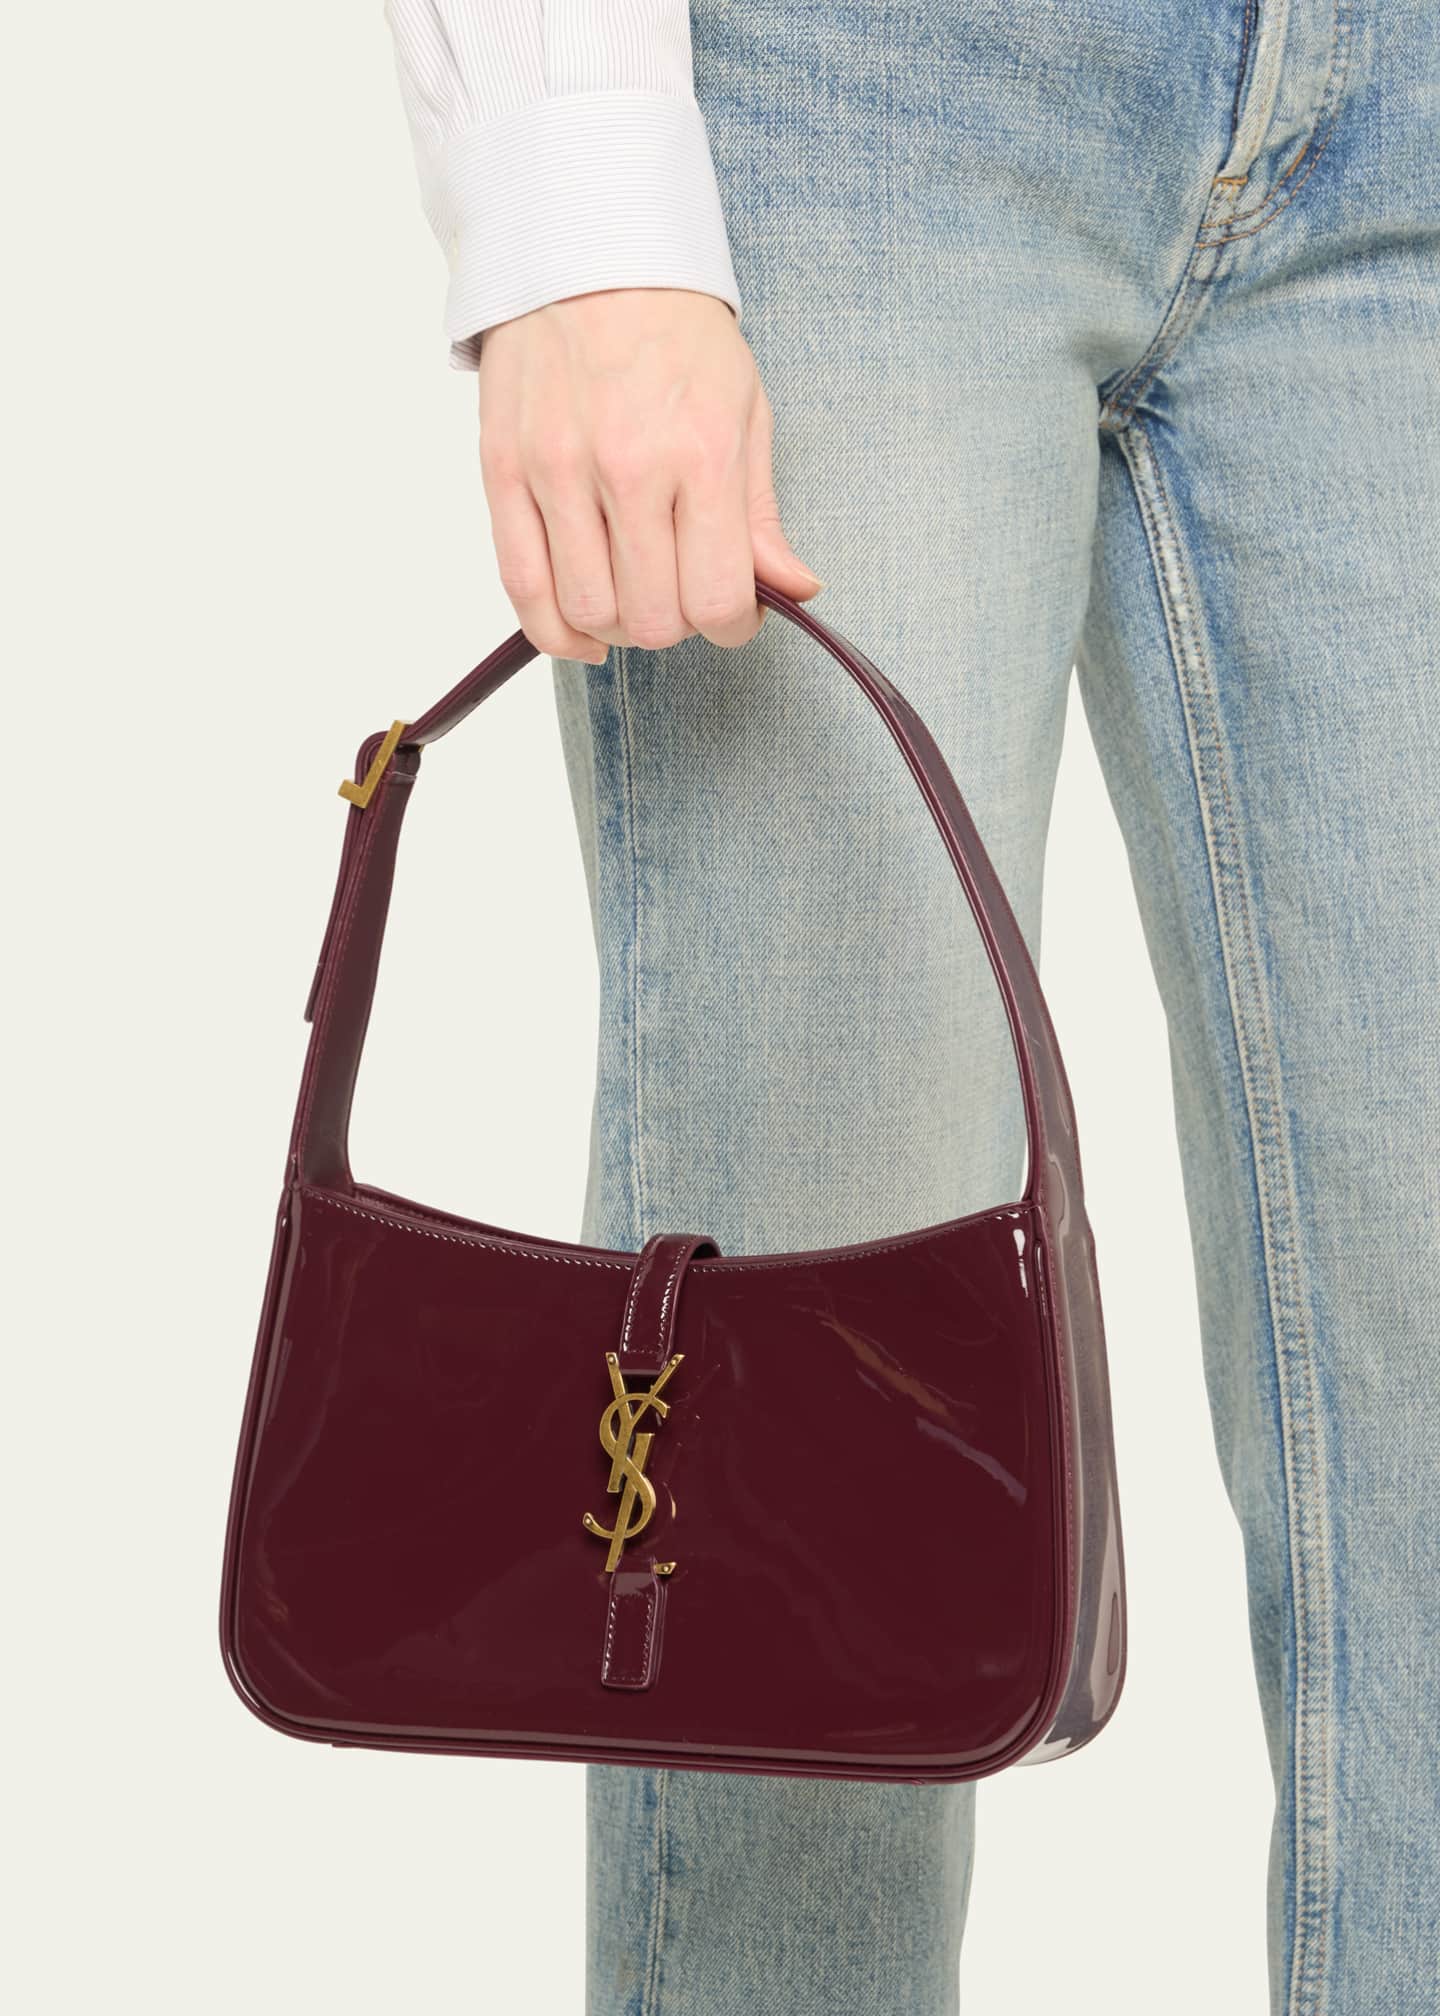 Saint Laurent Le 5 A 7 YSL Shoulder Bag in Patent Leather | Bergdorf Goodman